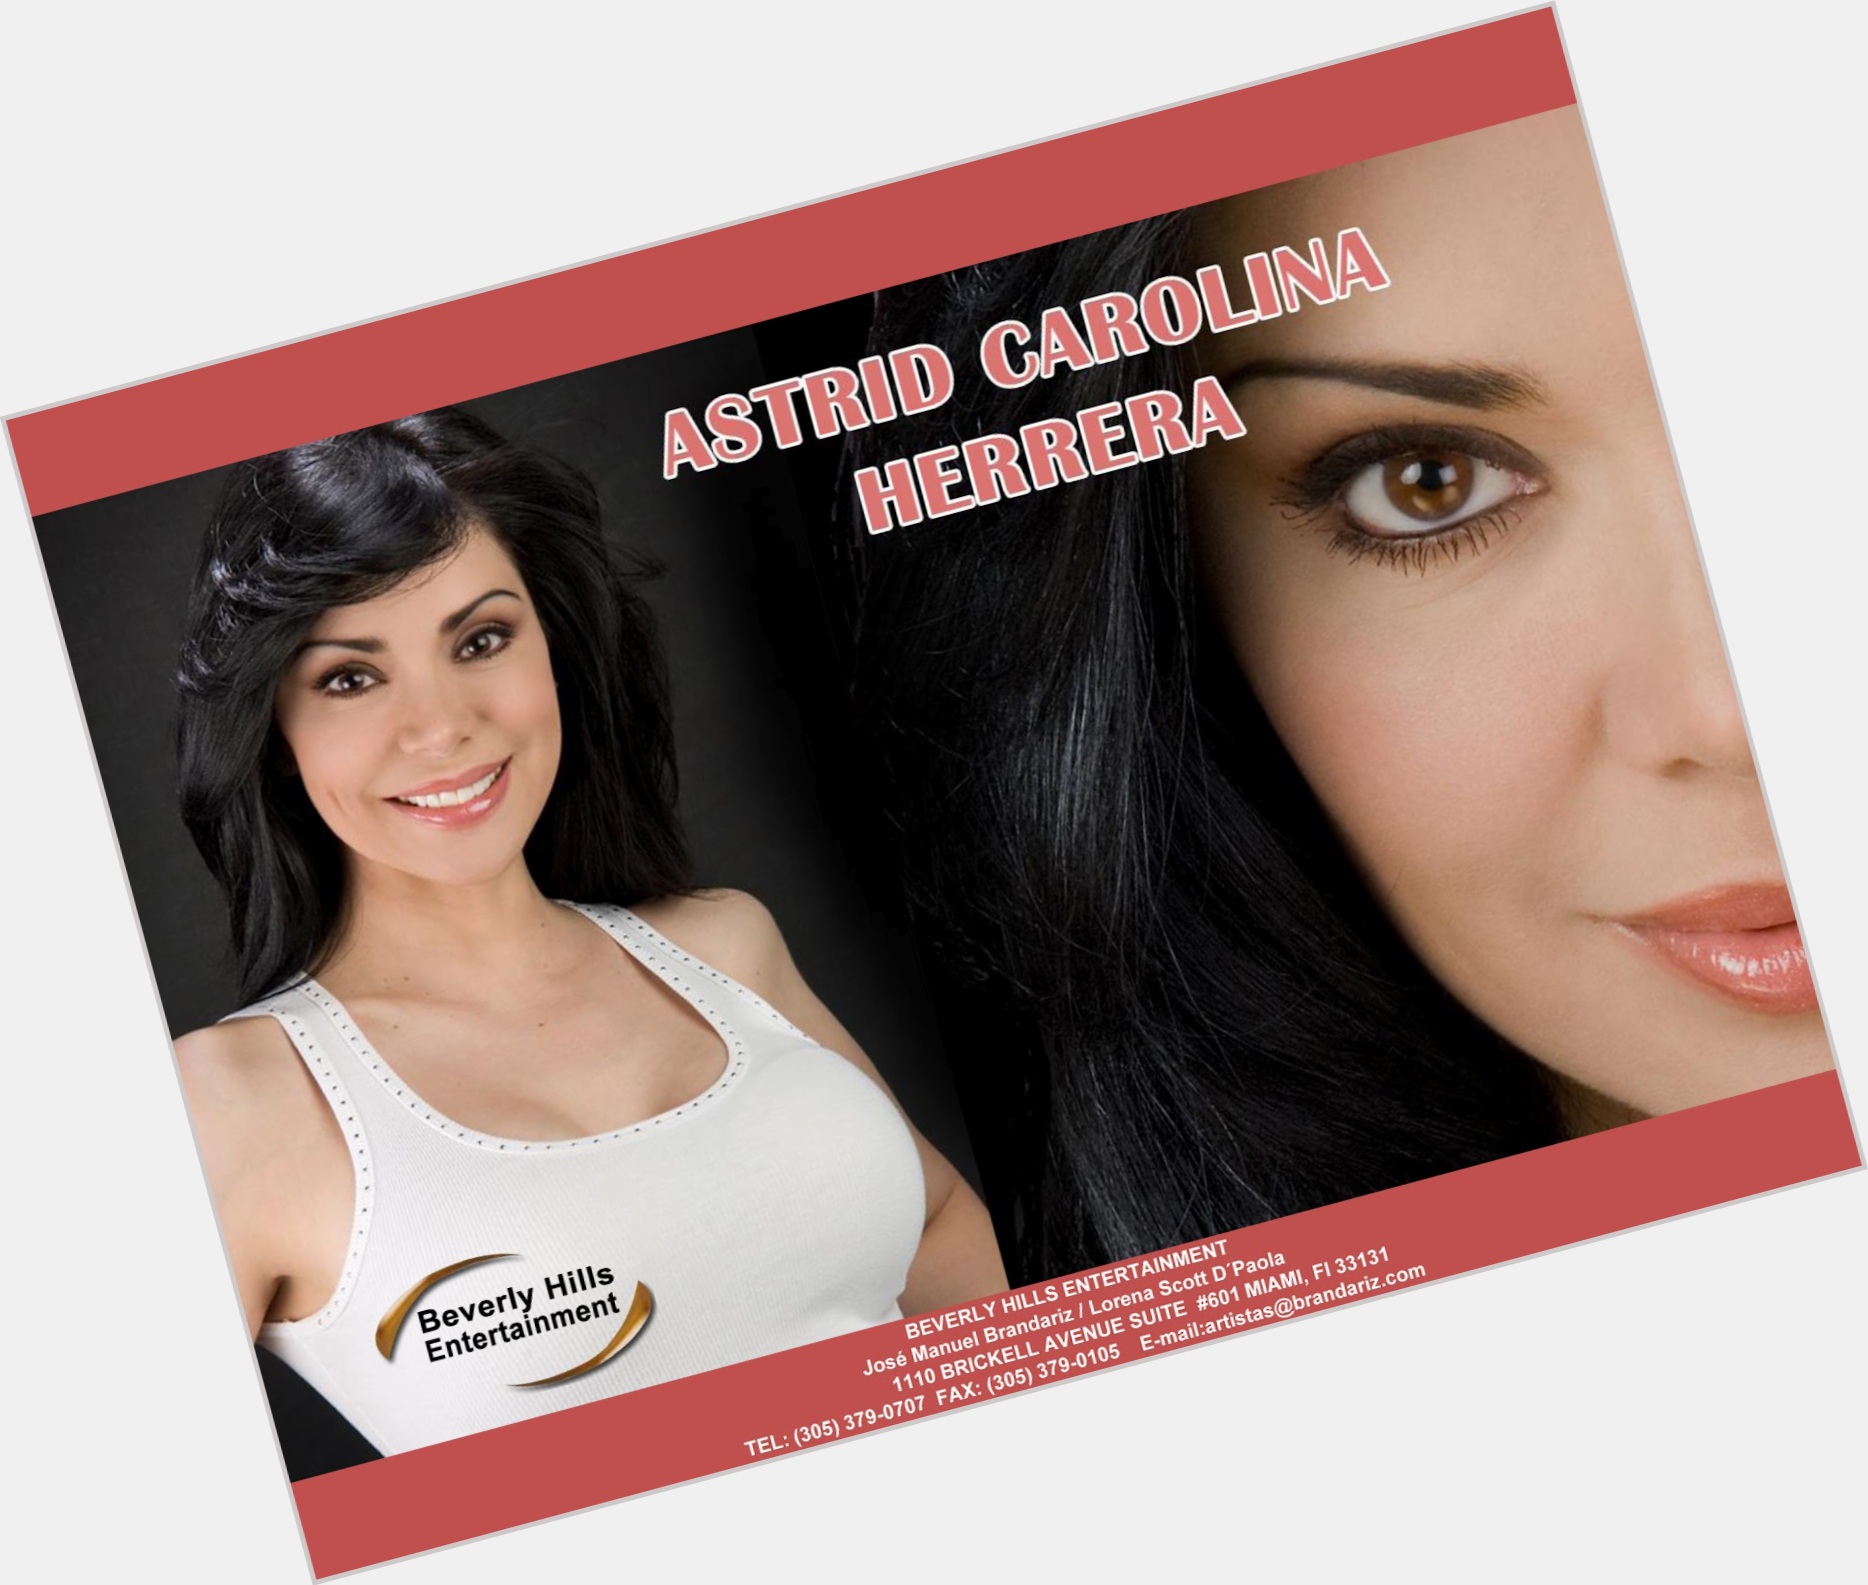 Astrid Carolina Herrera shirtless bikini